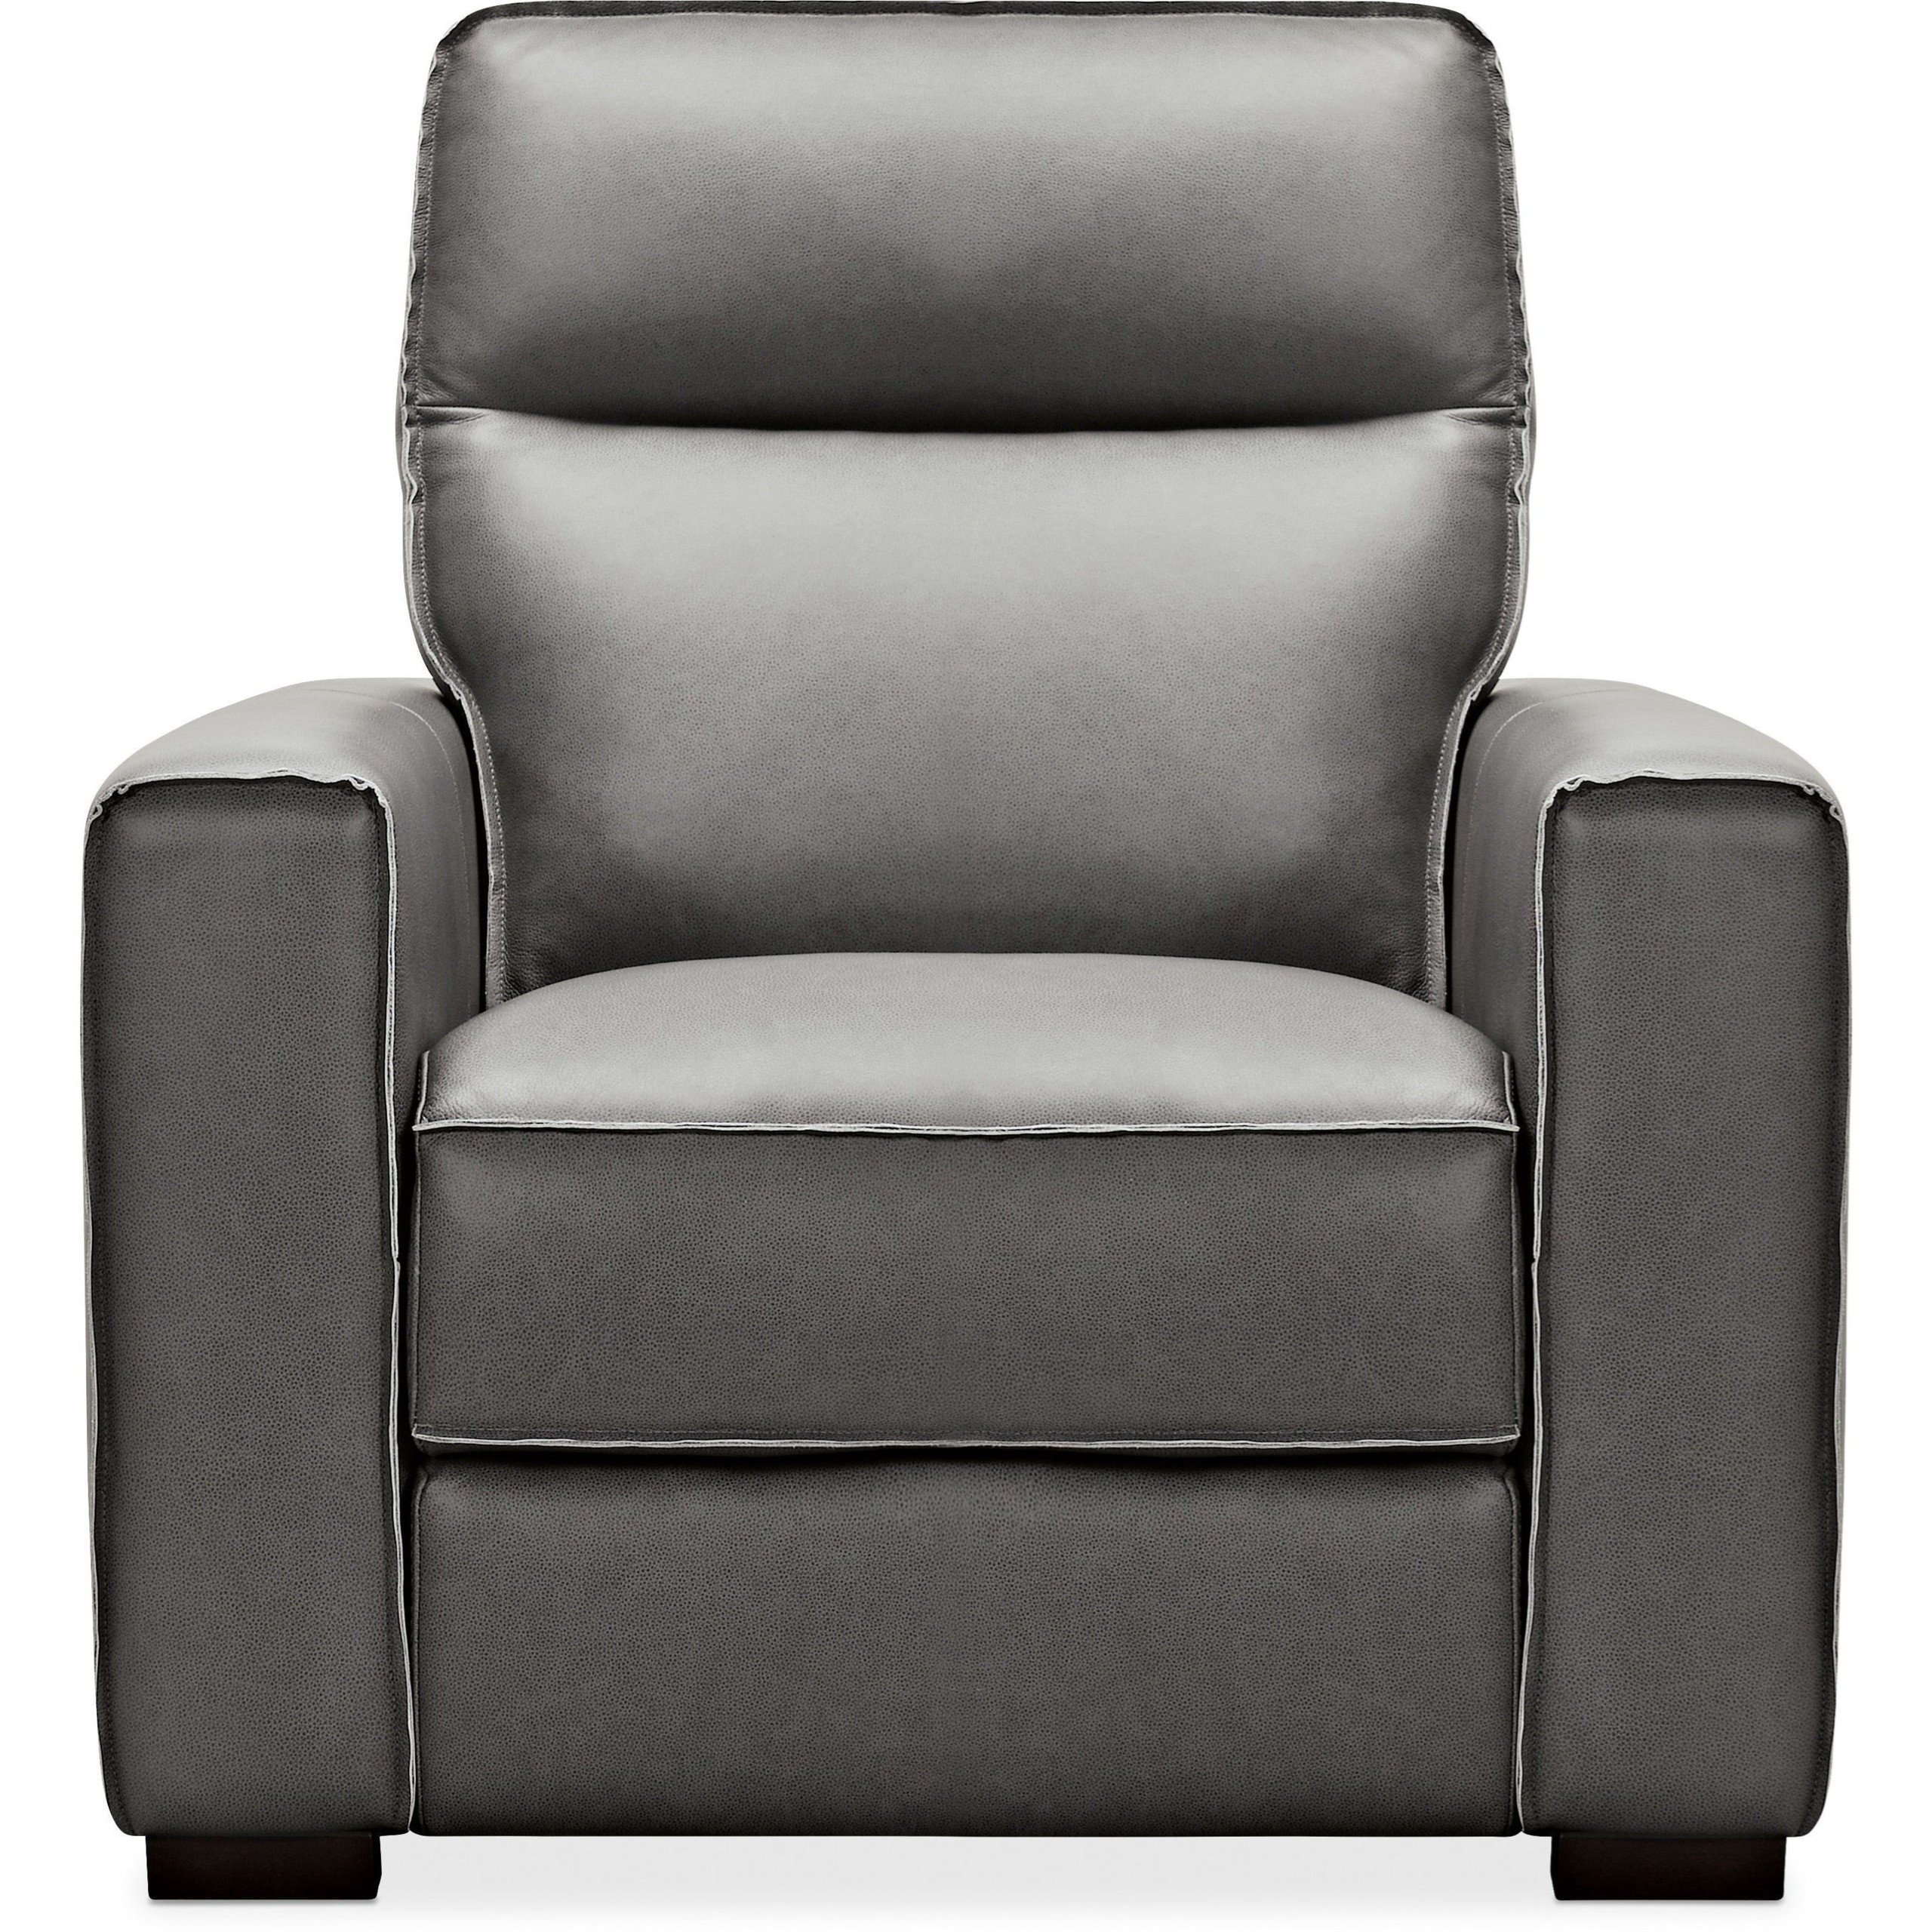 Hooker furniture braeburn contemporary leather recliner